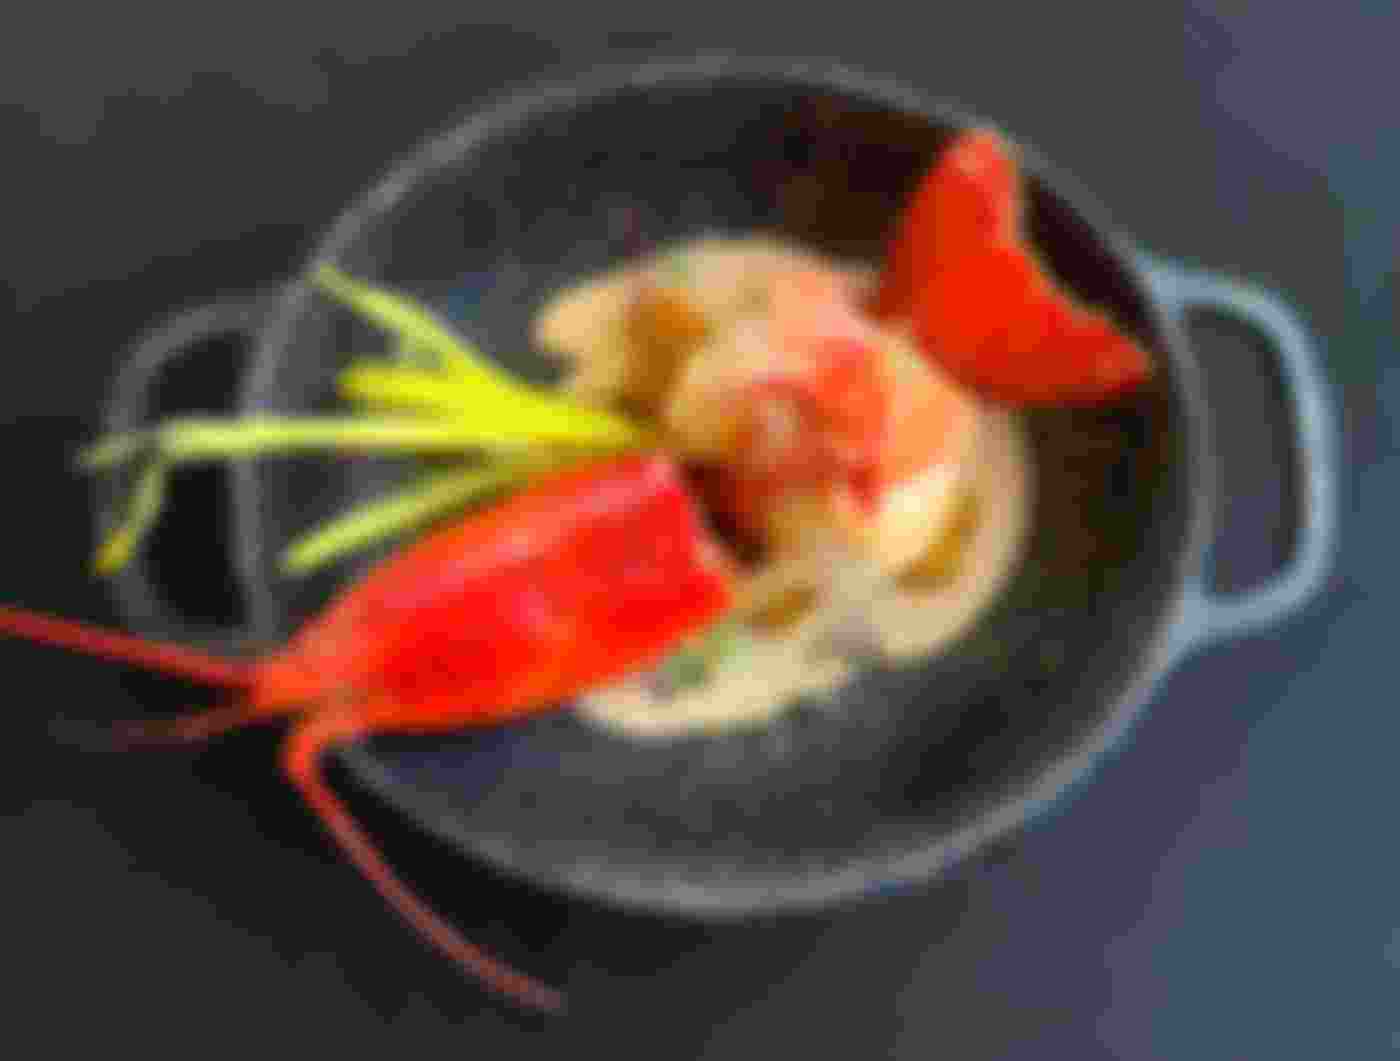 lobster dish